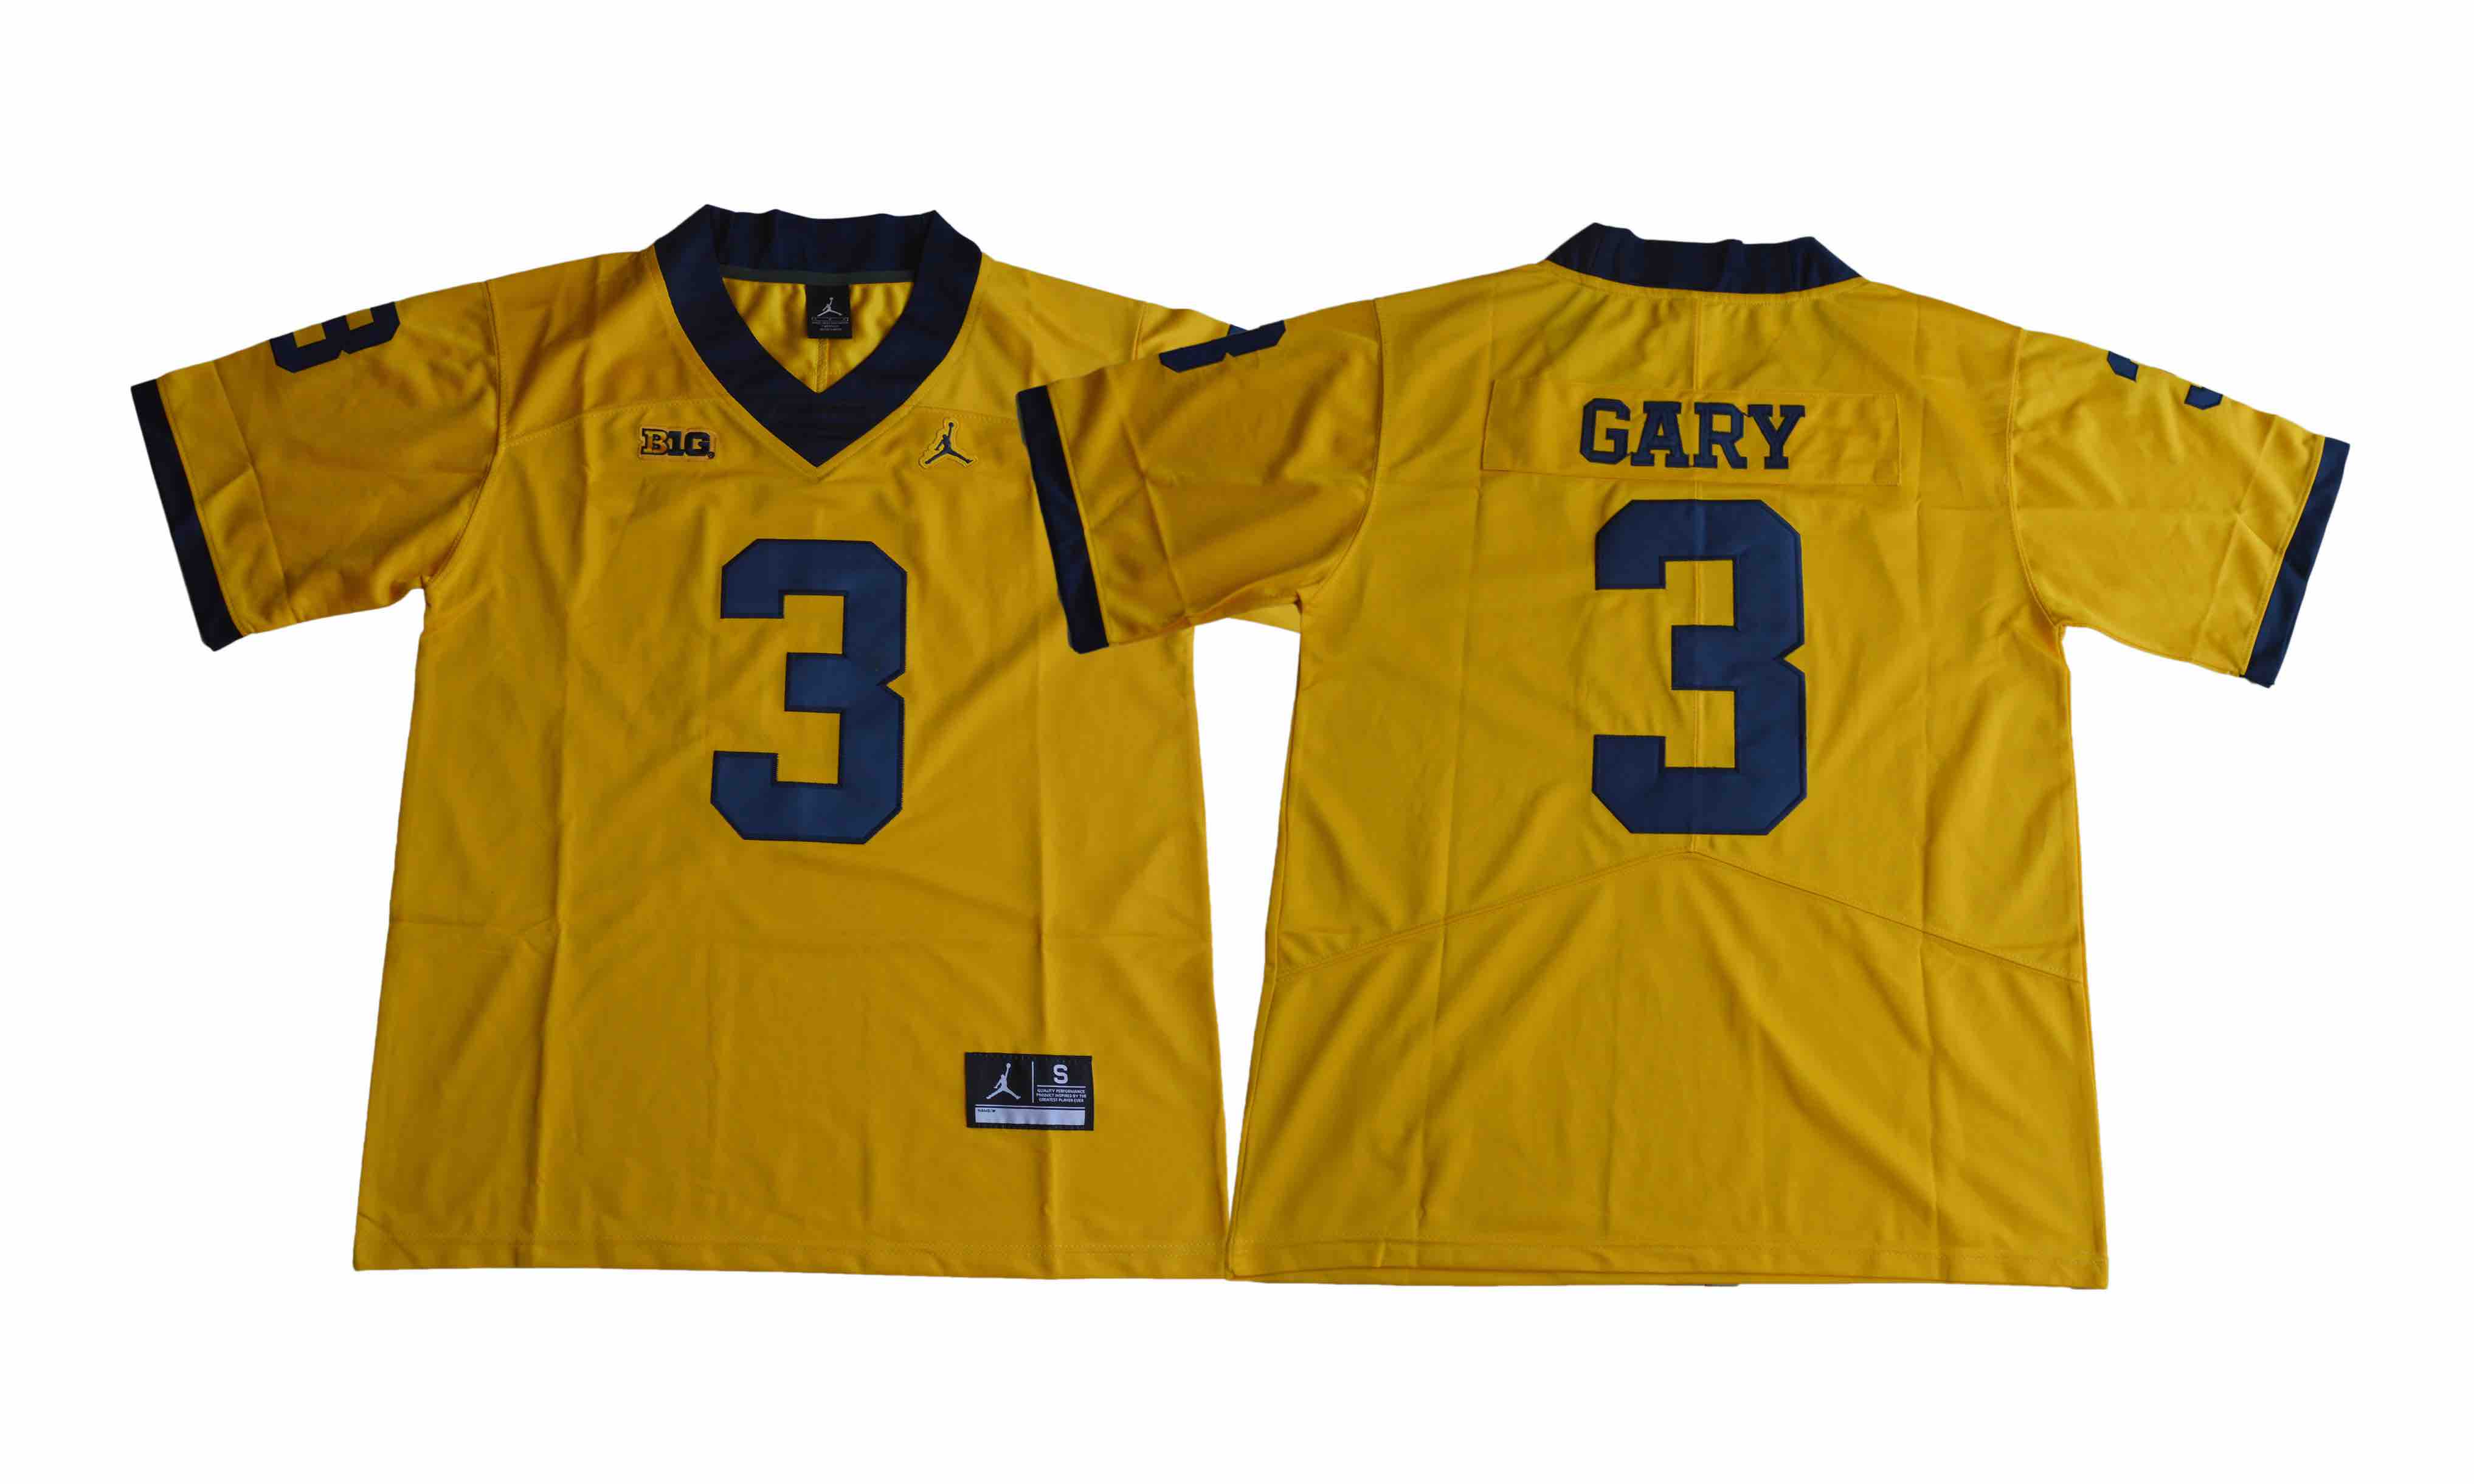 NCAA Michigan Wolverines #3 Gary College Yellow Jersey